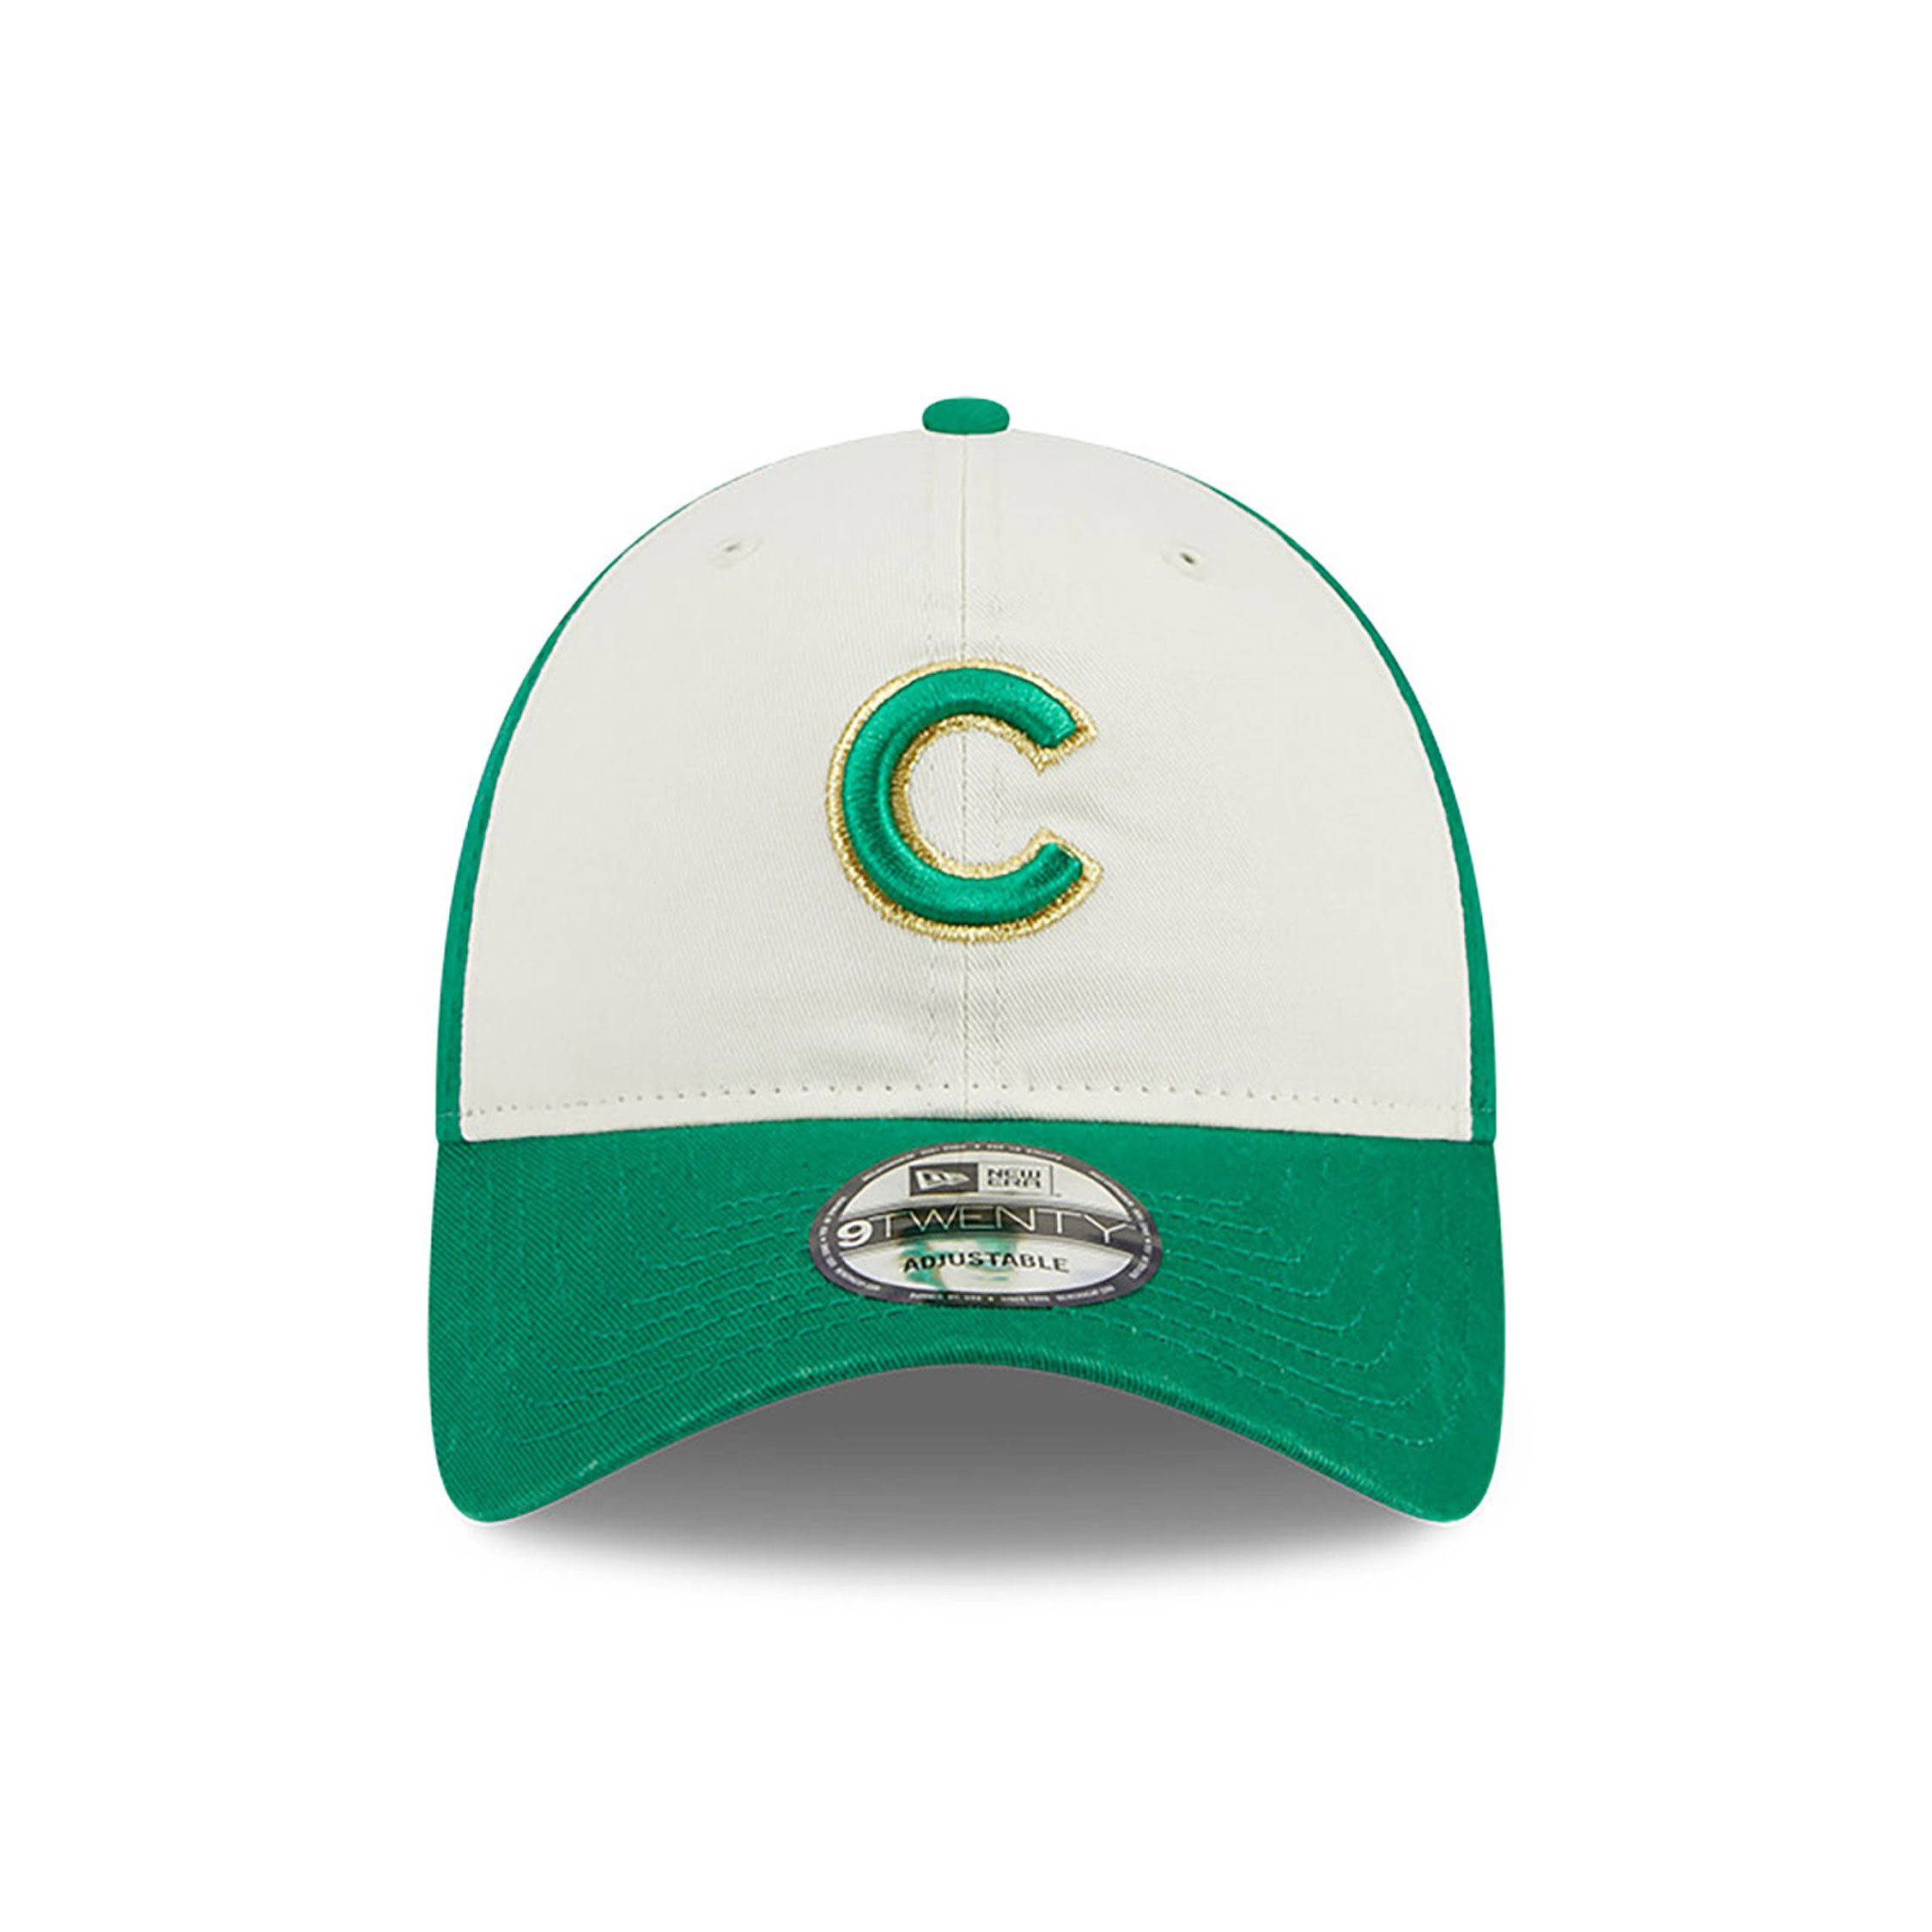 Chicago Cubs St. Patrick's Day Green 9TWENTY Adjustable Cap